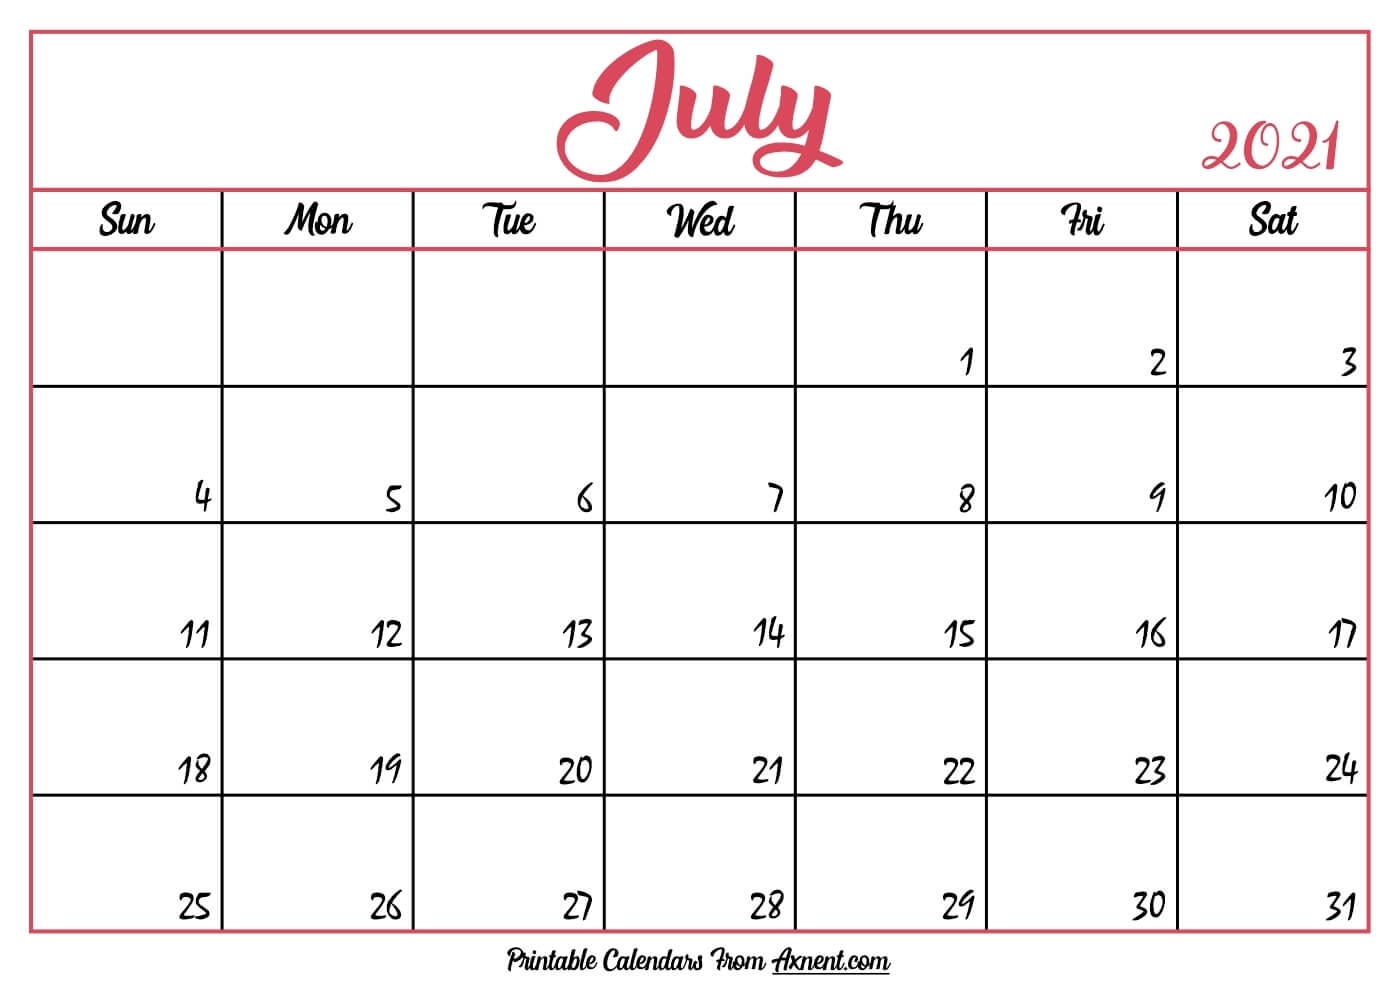 Take Print Free July 2021 Calendar Without Downloading